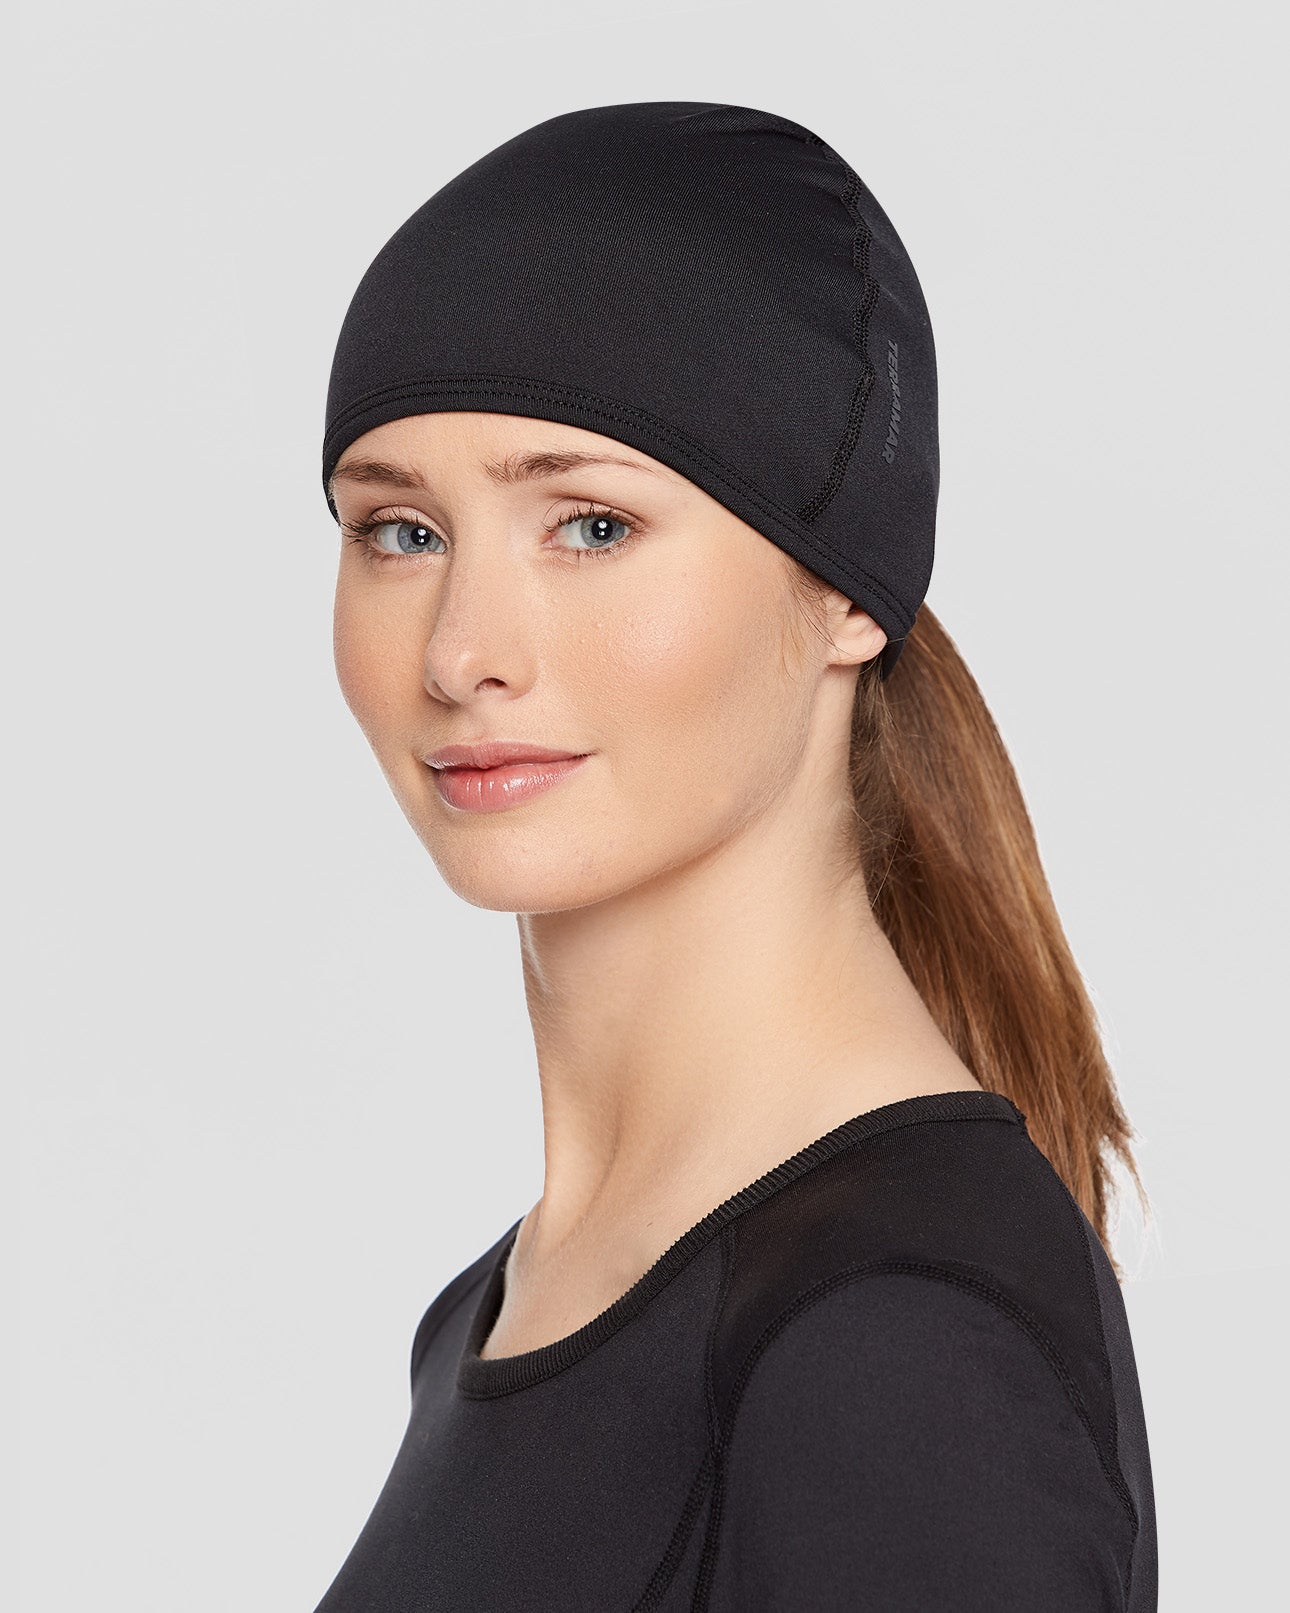 Women's Below-Zero Heavyweight Warm Hat | Color: Black